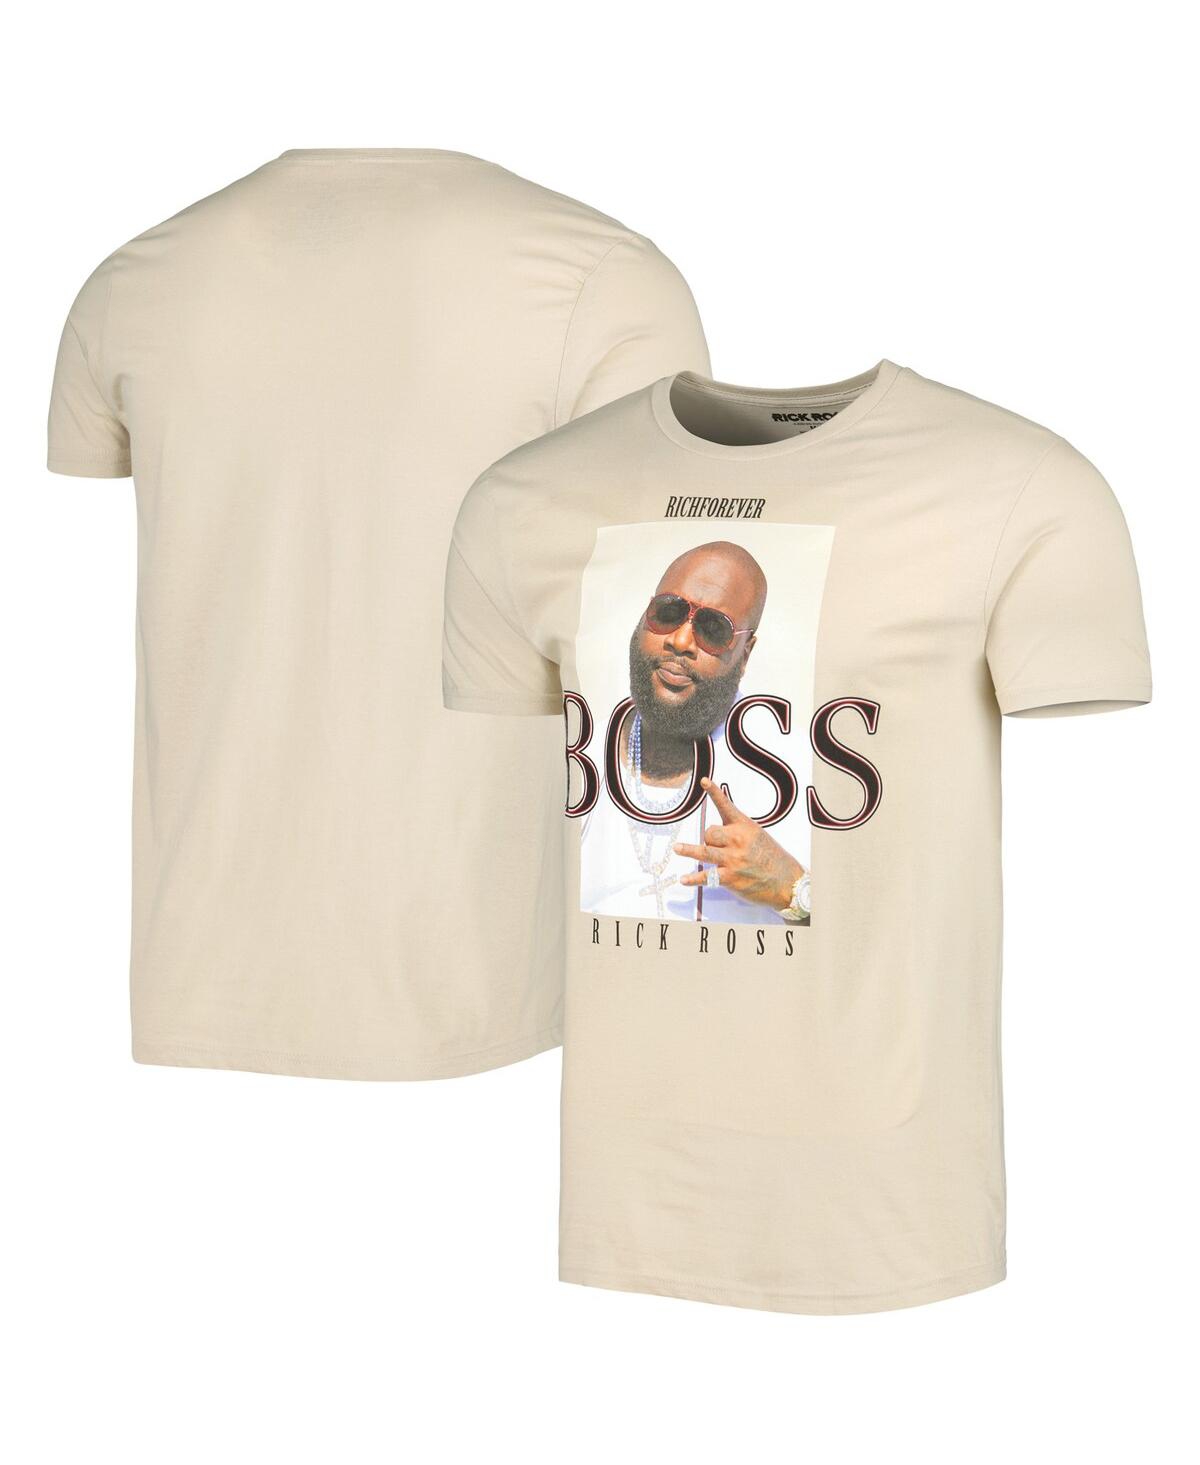 Men's and Women's Tan Rick Ross Graphic T-shirt - Tan